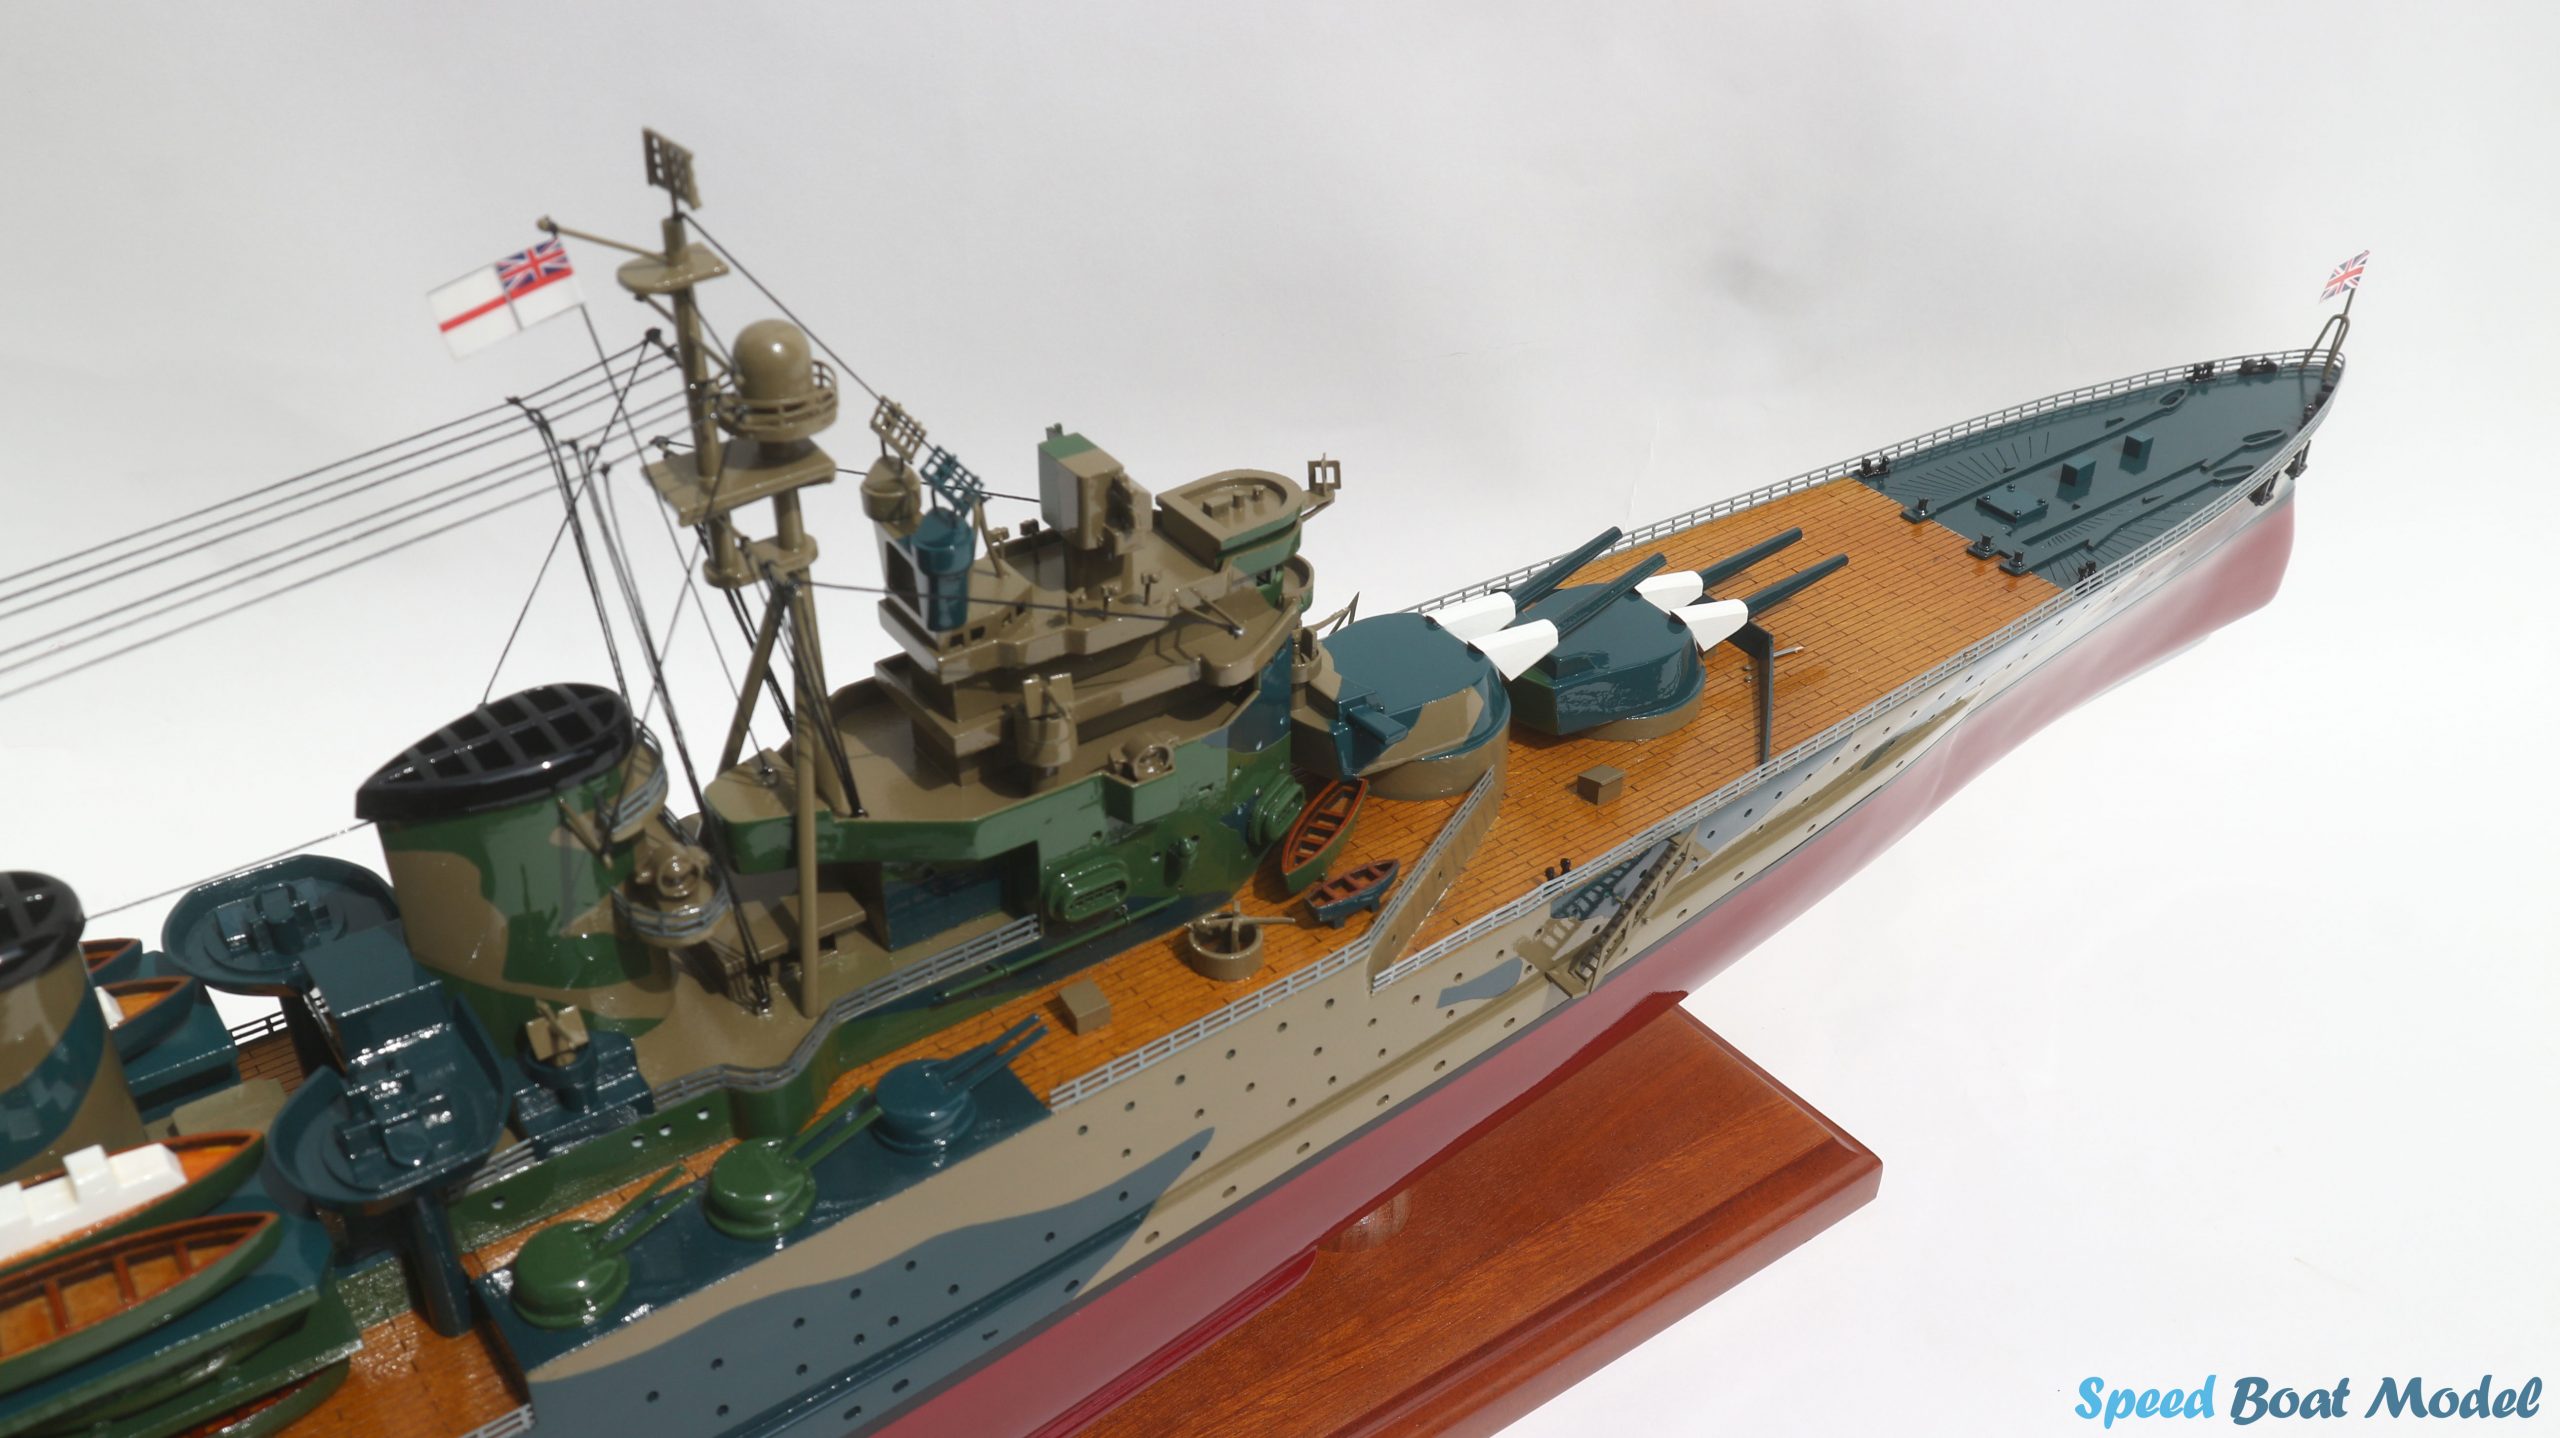 Hms Renown Warship Model 39.7"